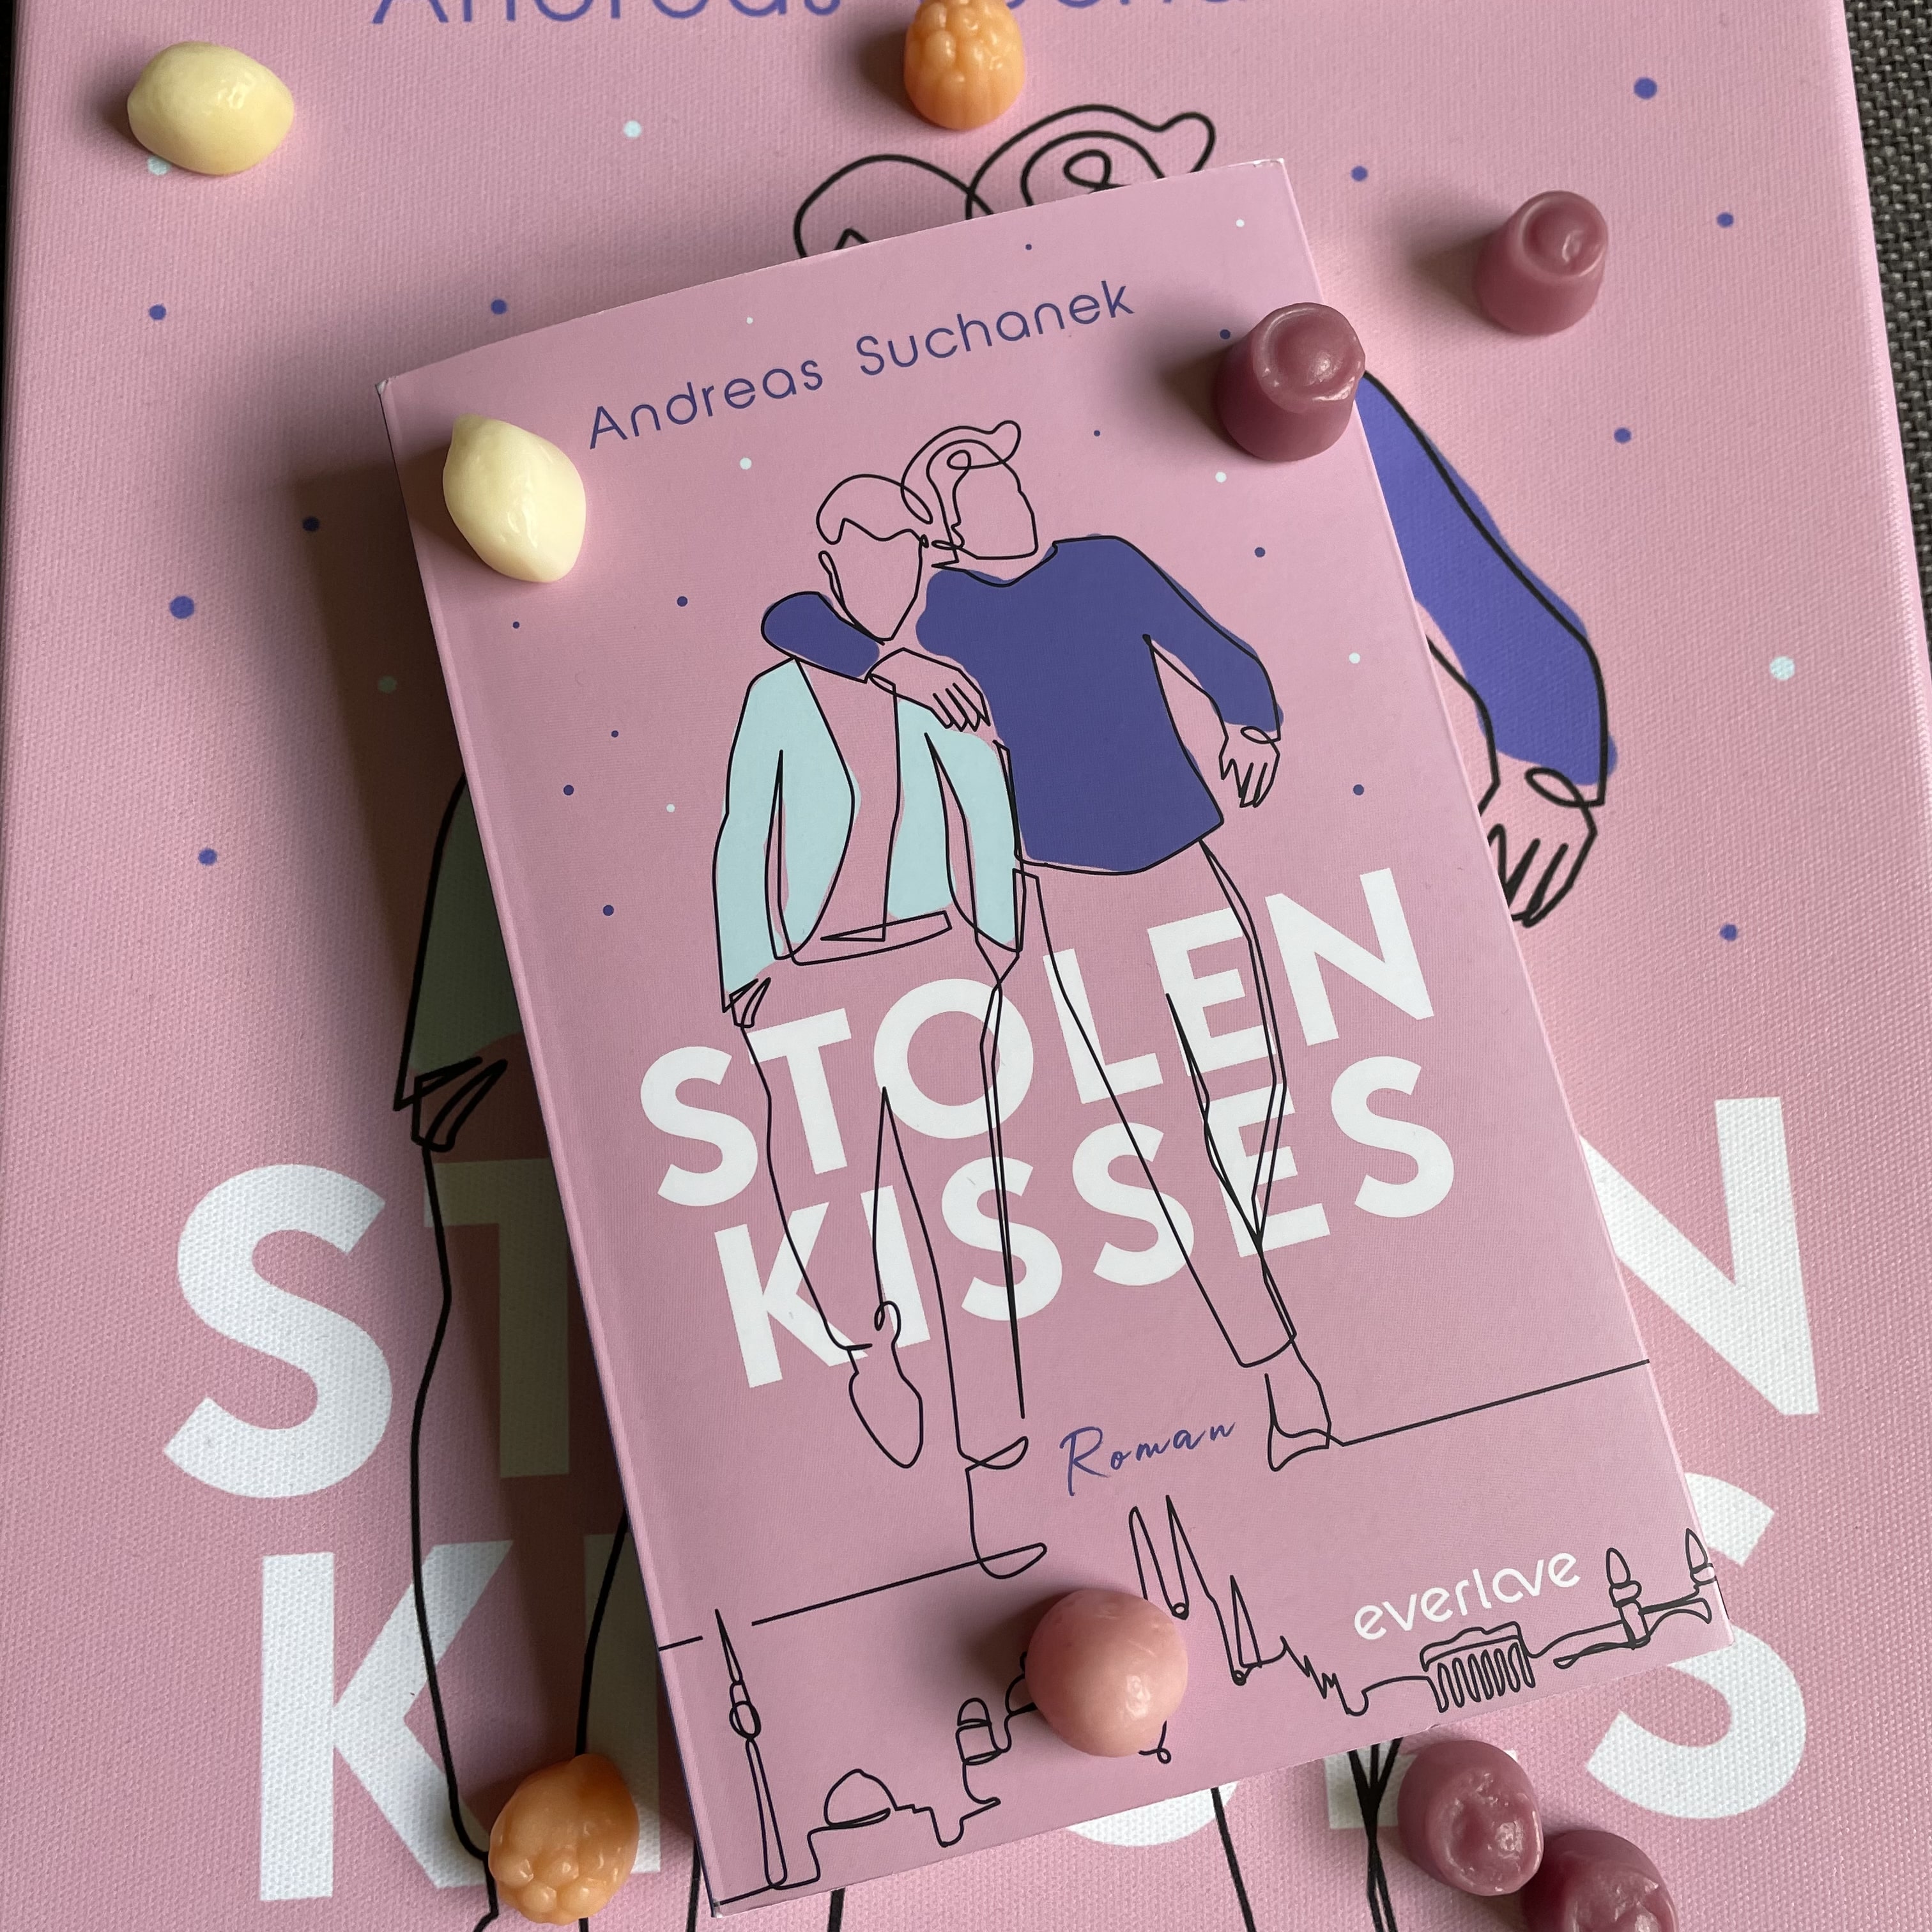 Stolen Kisses von Andreas Suchanek (Piper Verlag)